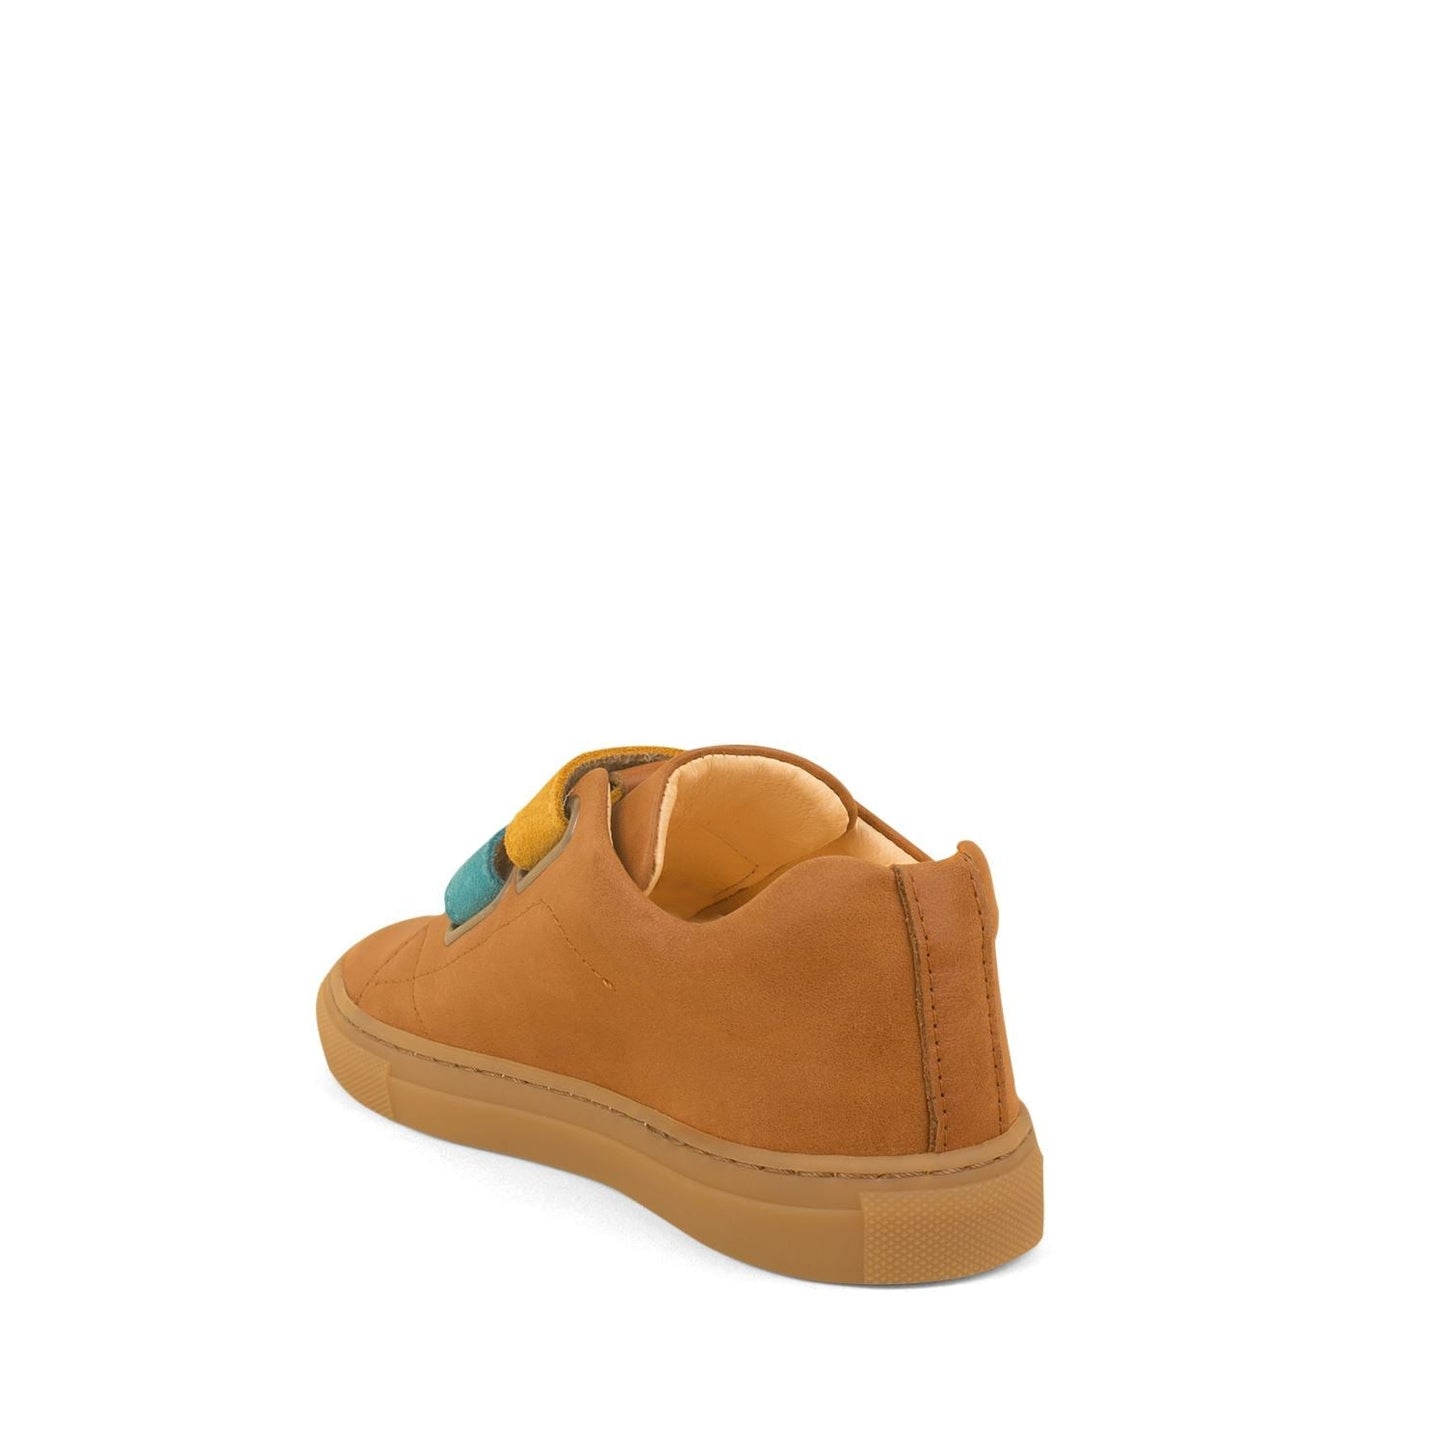 Velcro Sneakers - Camel Shoes Dulis Shoes 